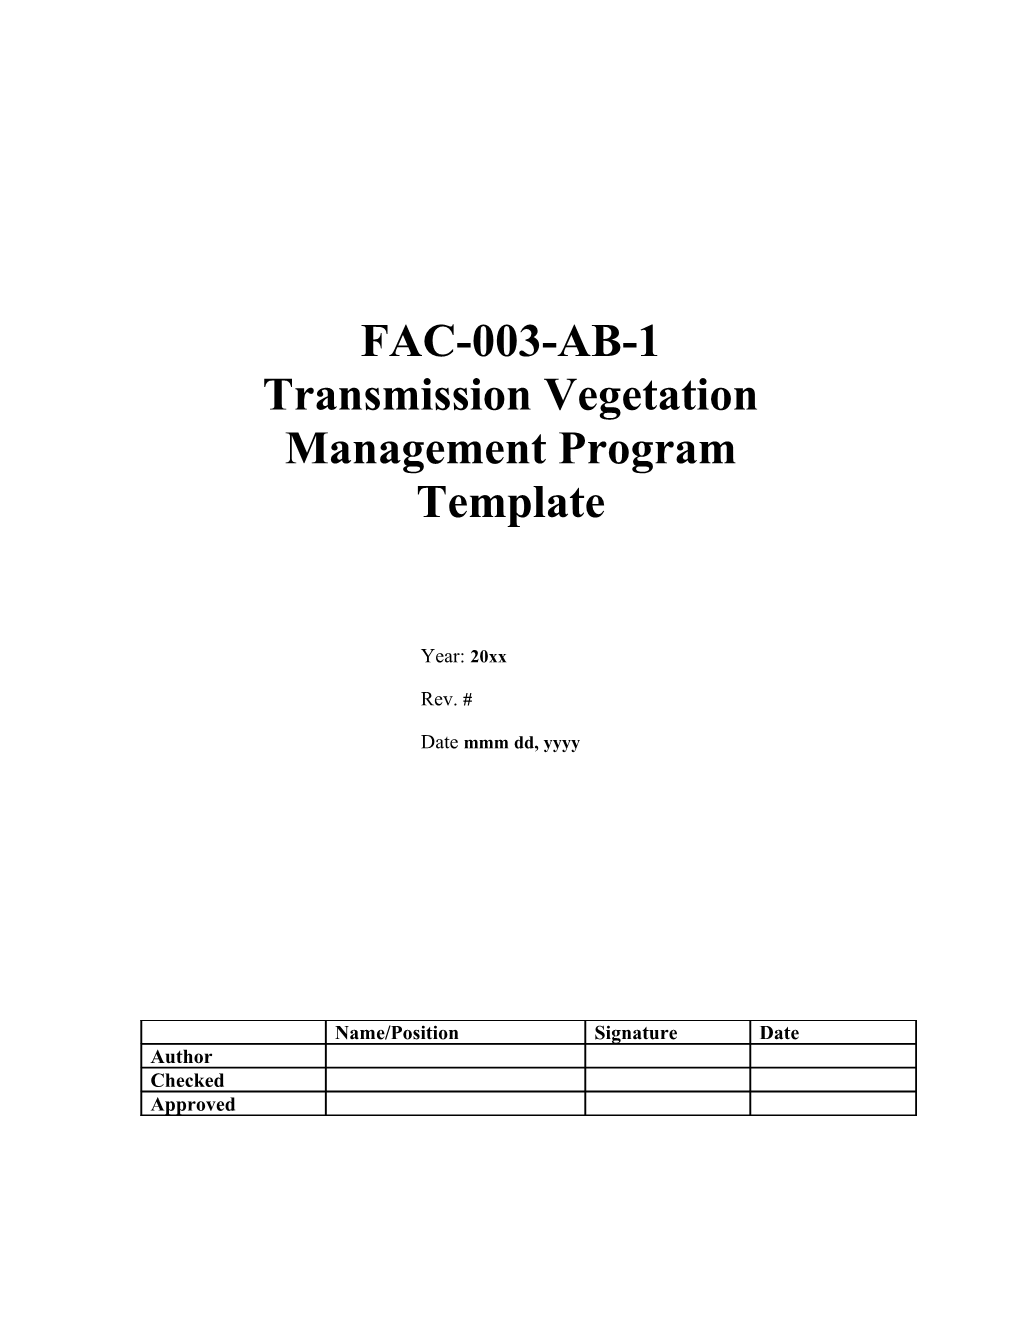 FAC-003-AB-1 Transmission Vegetation Management Program